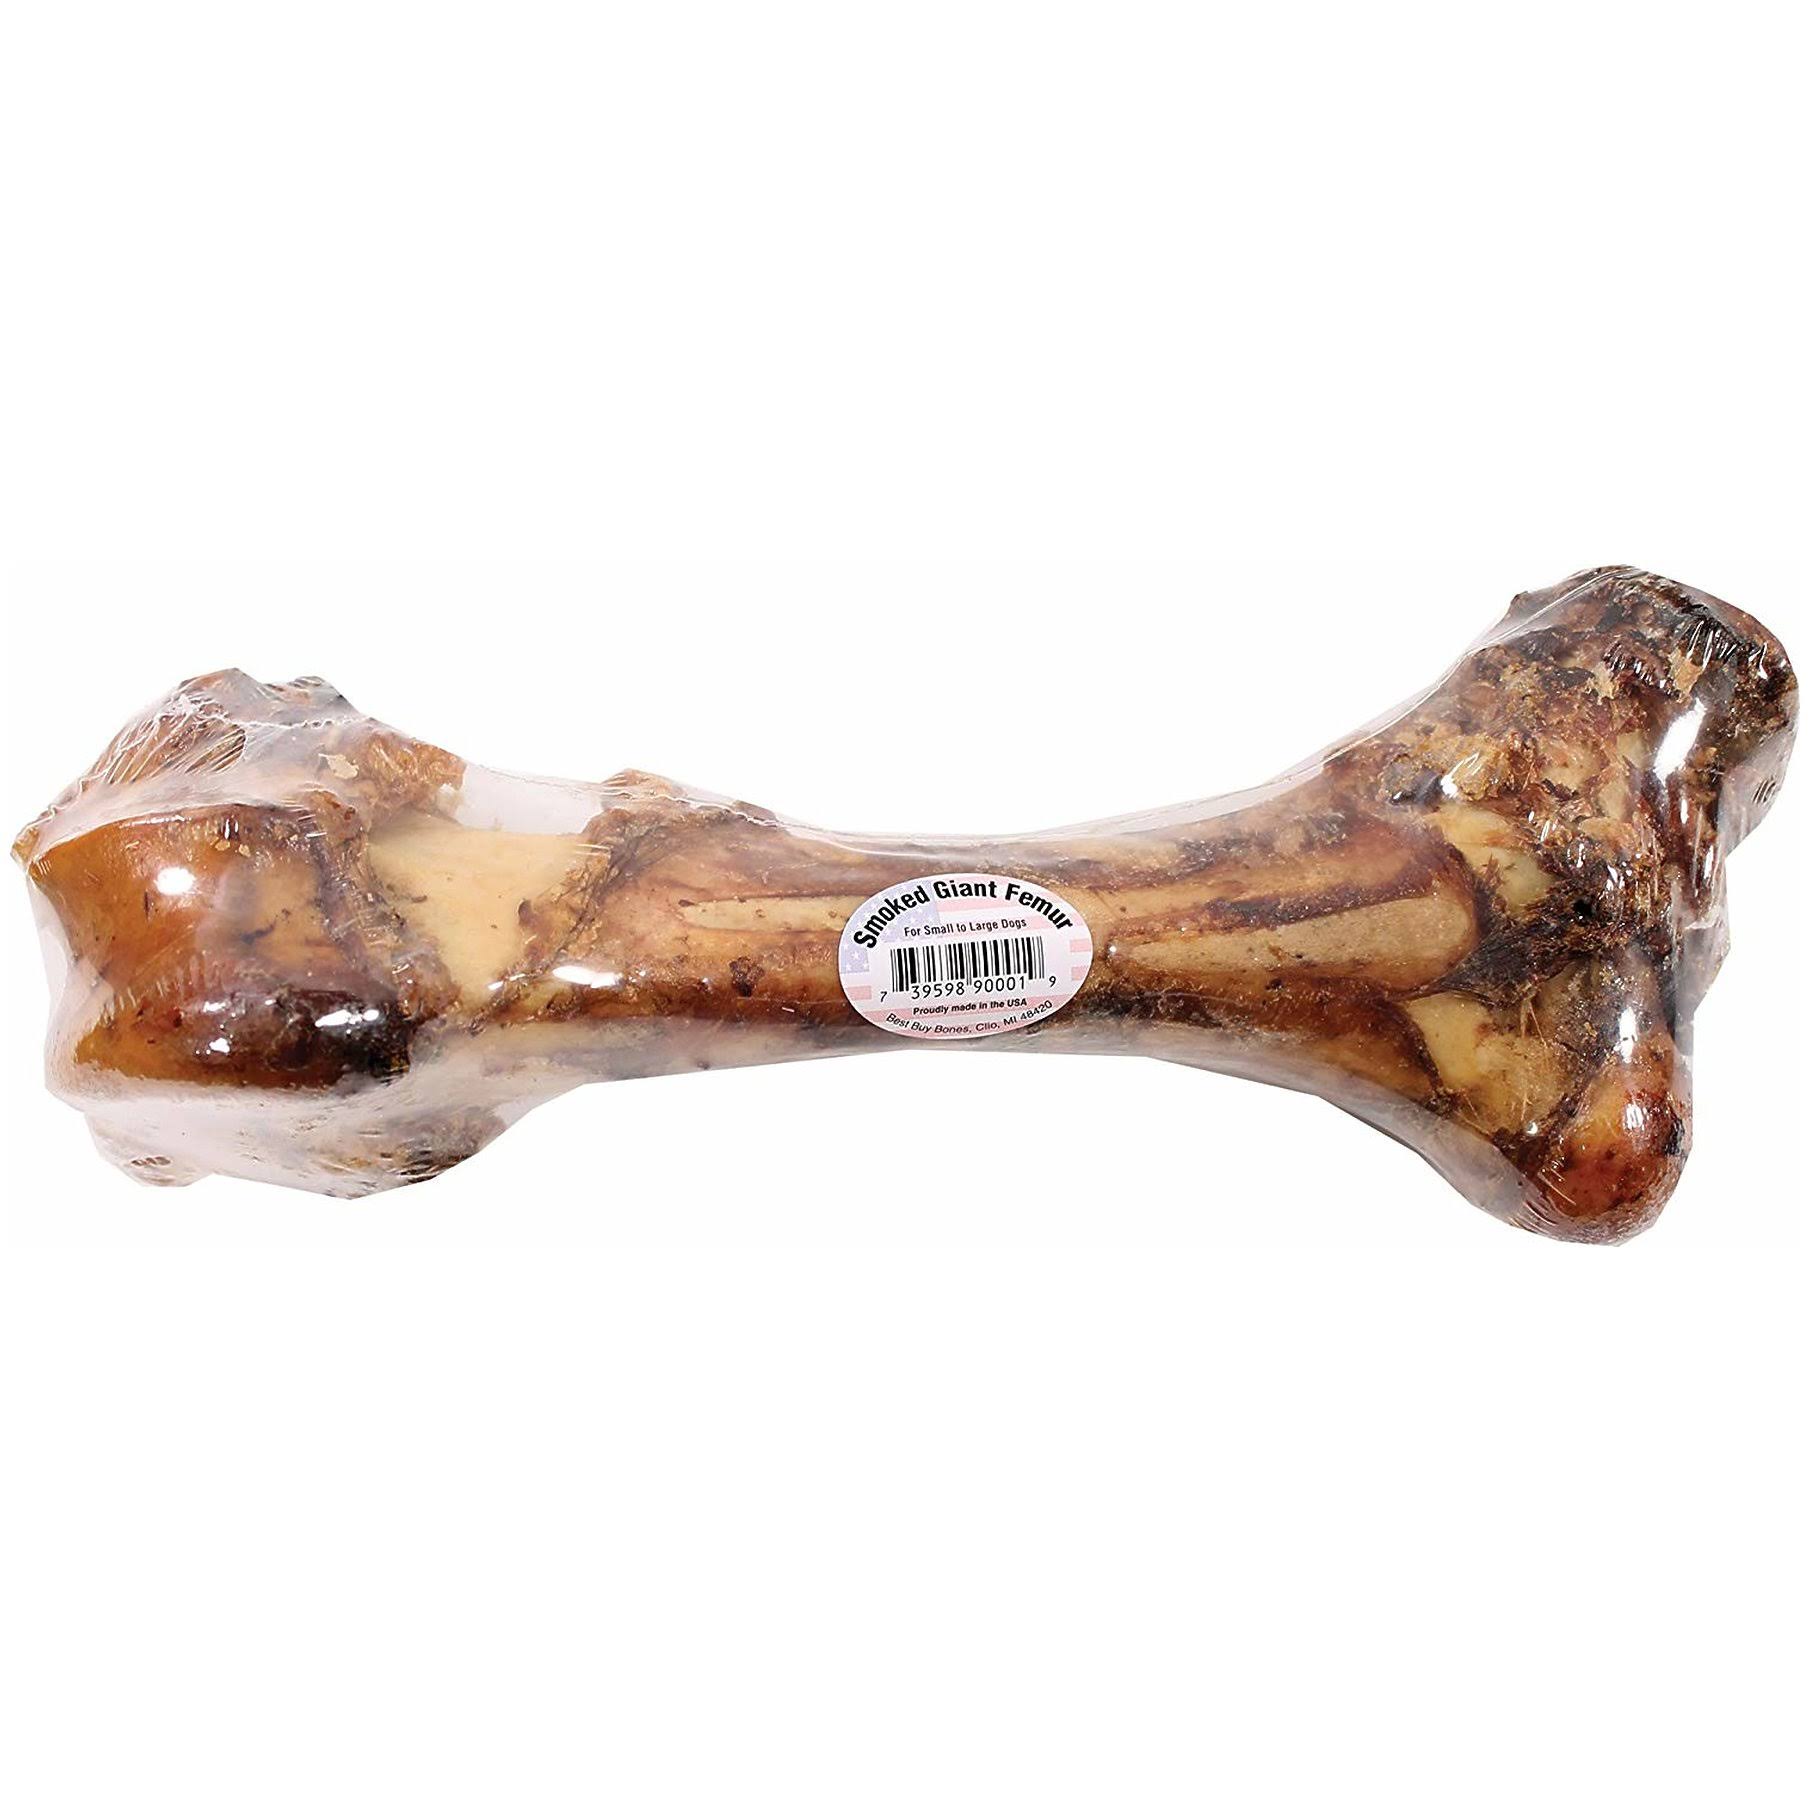 USA Made Smoked Giant Femur Dog Chew